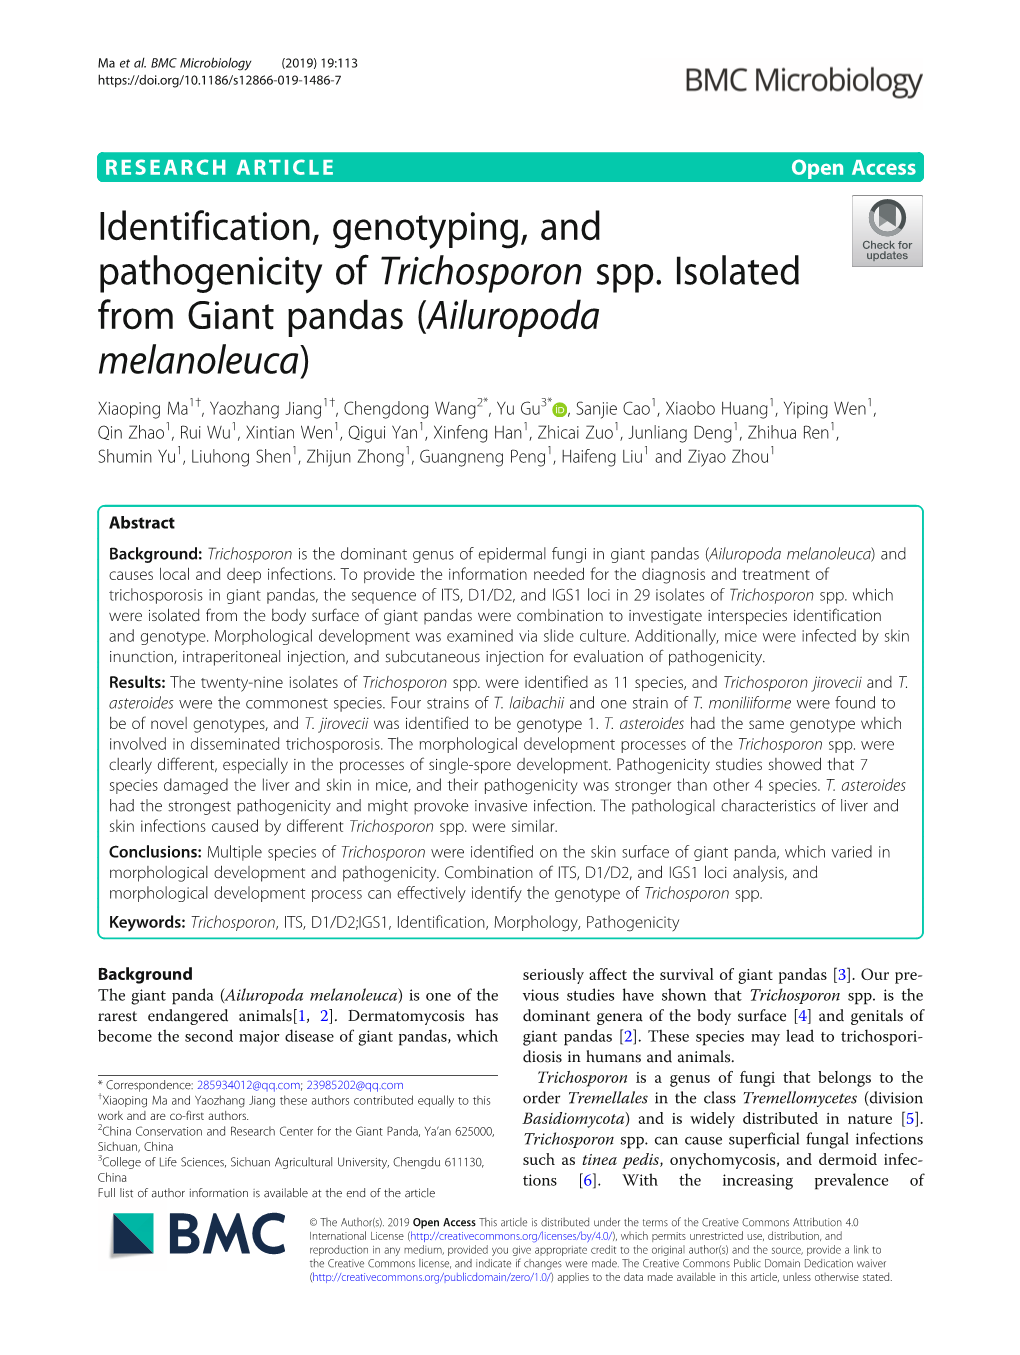 Identification, Genotyping, and Pathogenicity of Trichosporon Spp